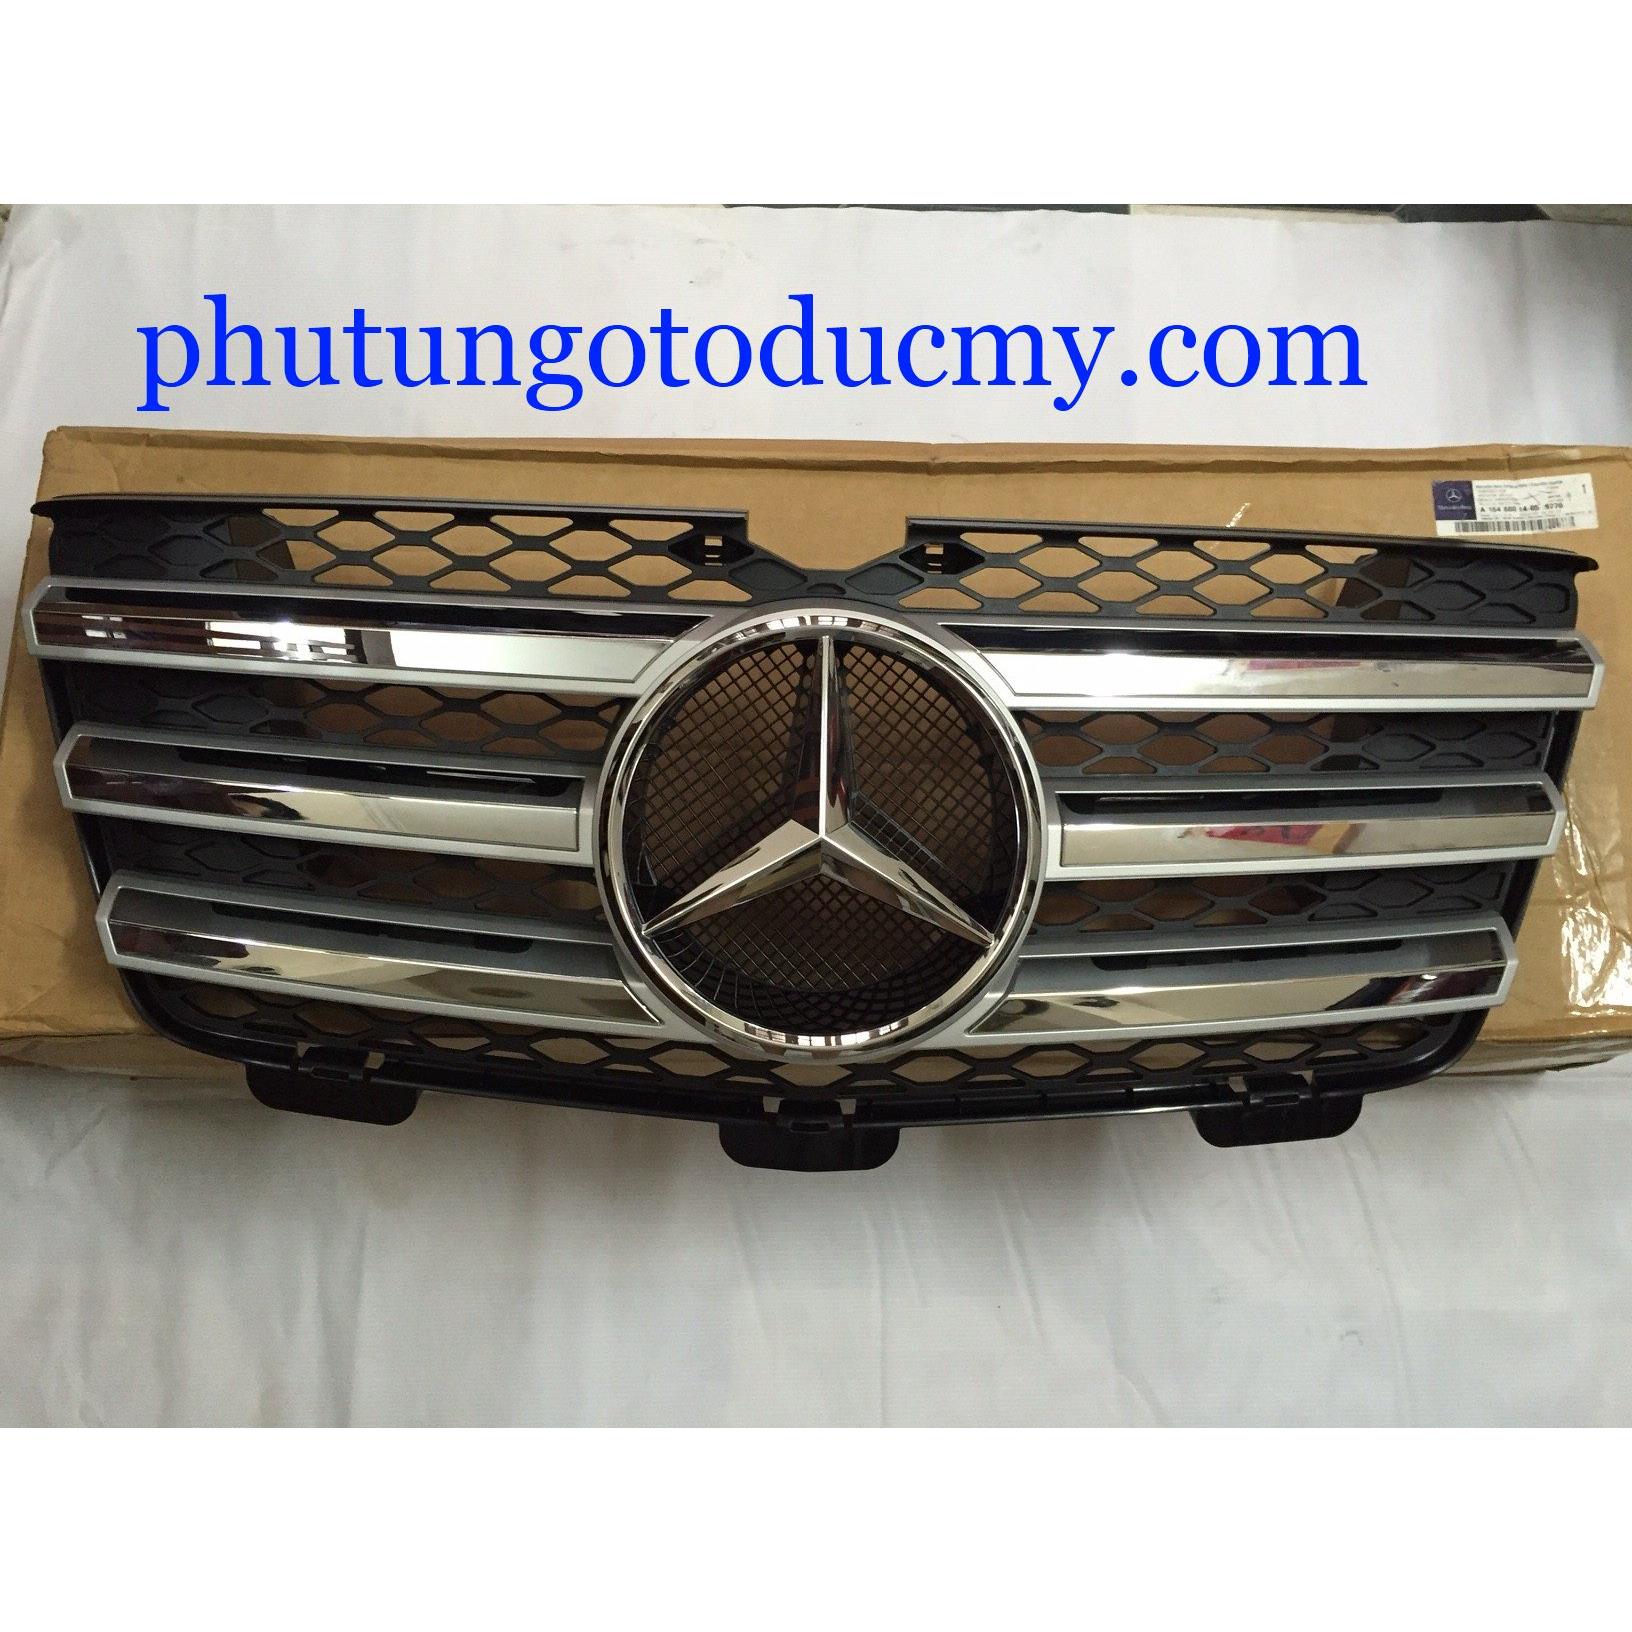 Mặt calang Mercedes GL450, GL550- A1648801485 nhập khẩu giá tốt